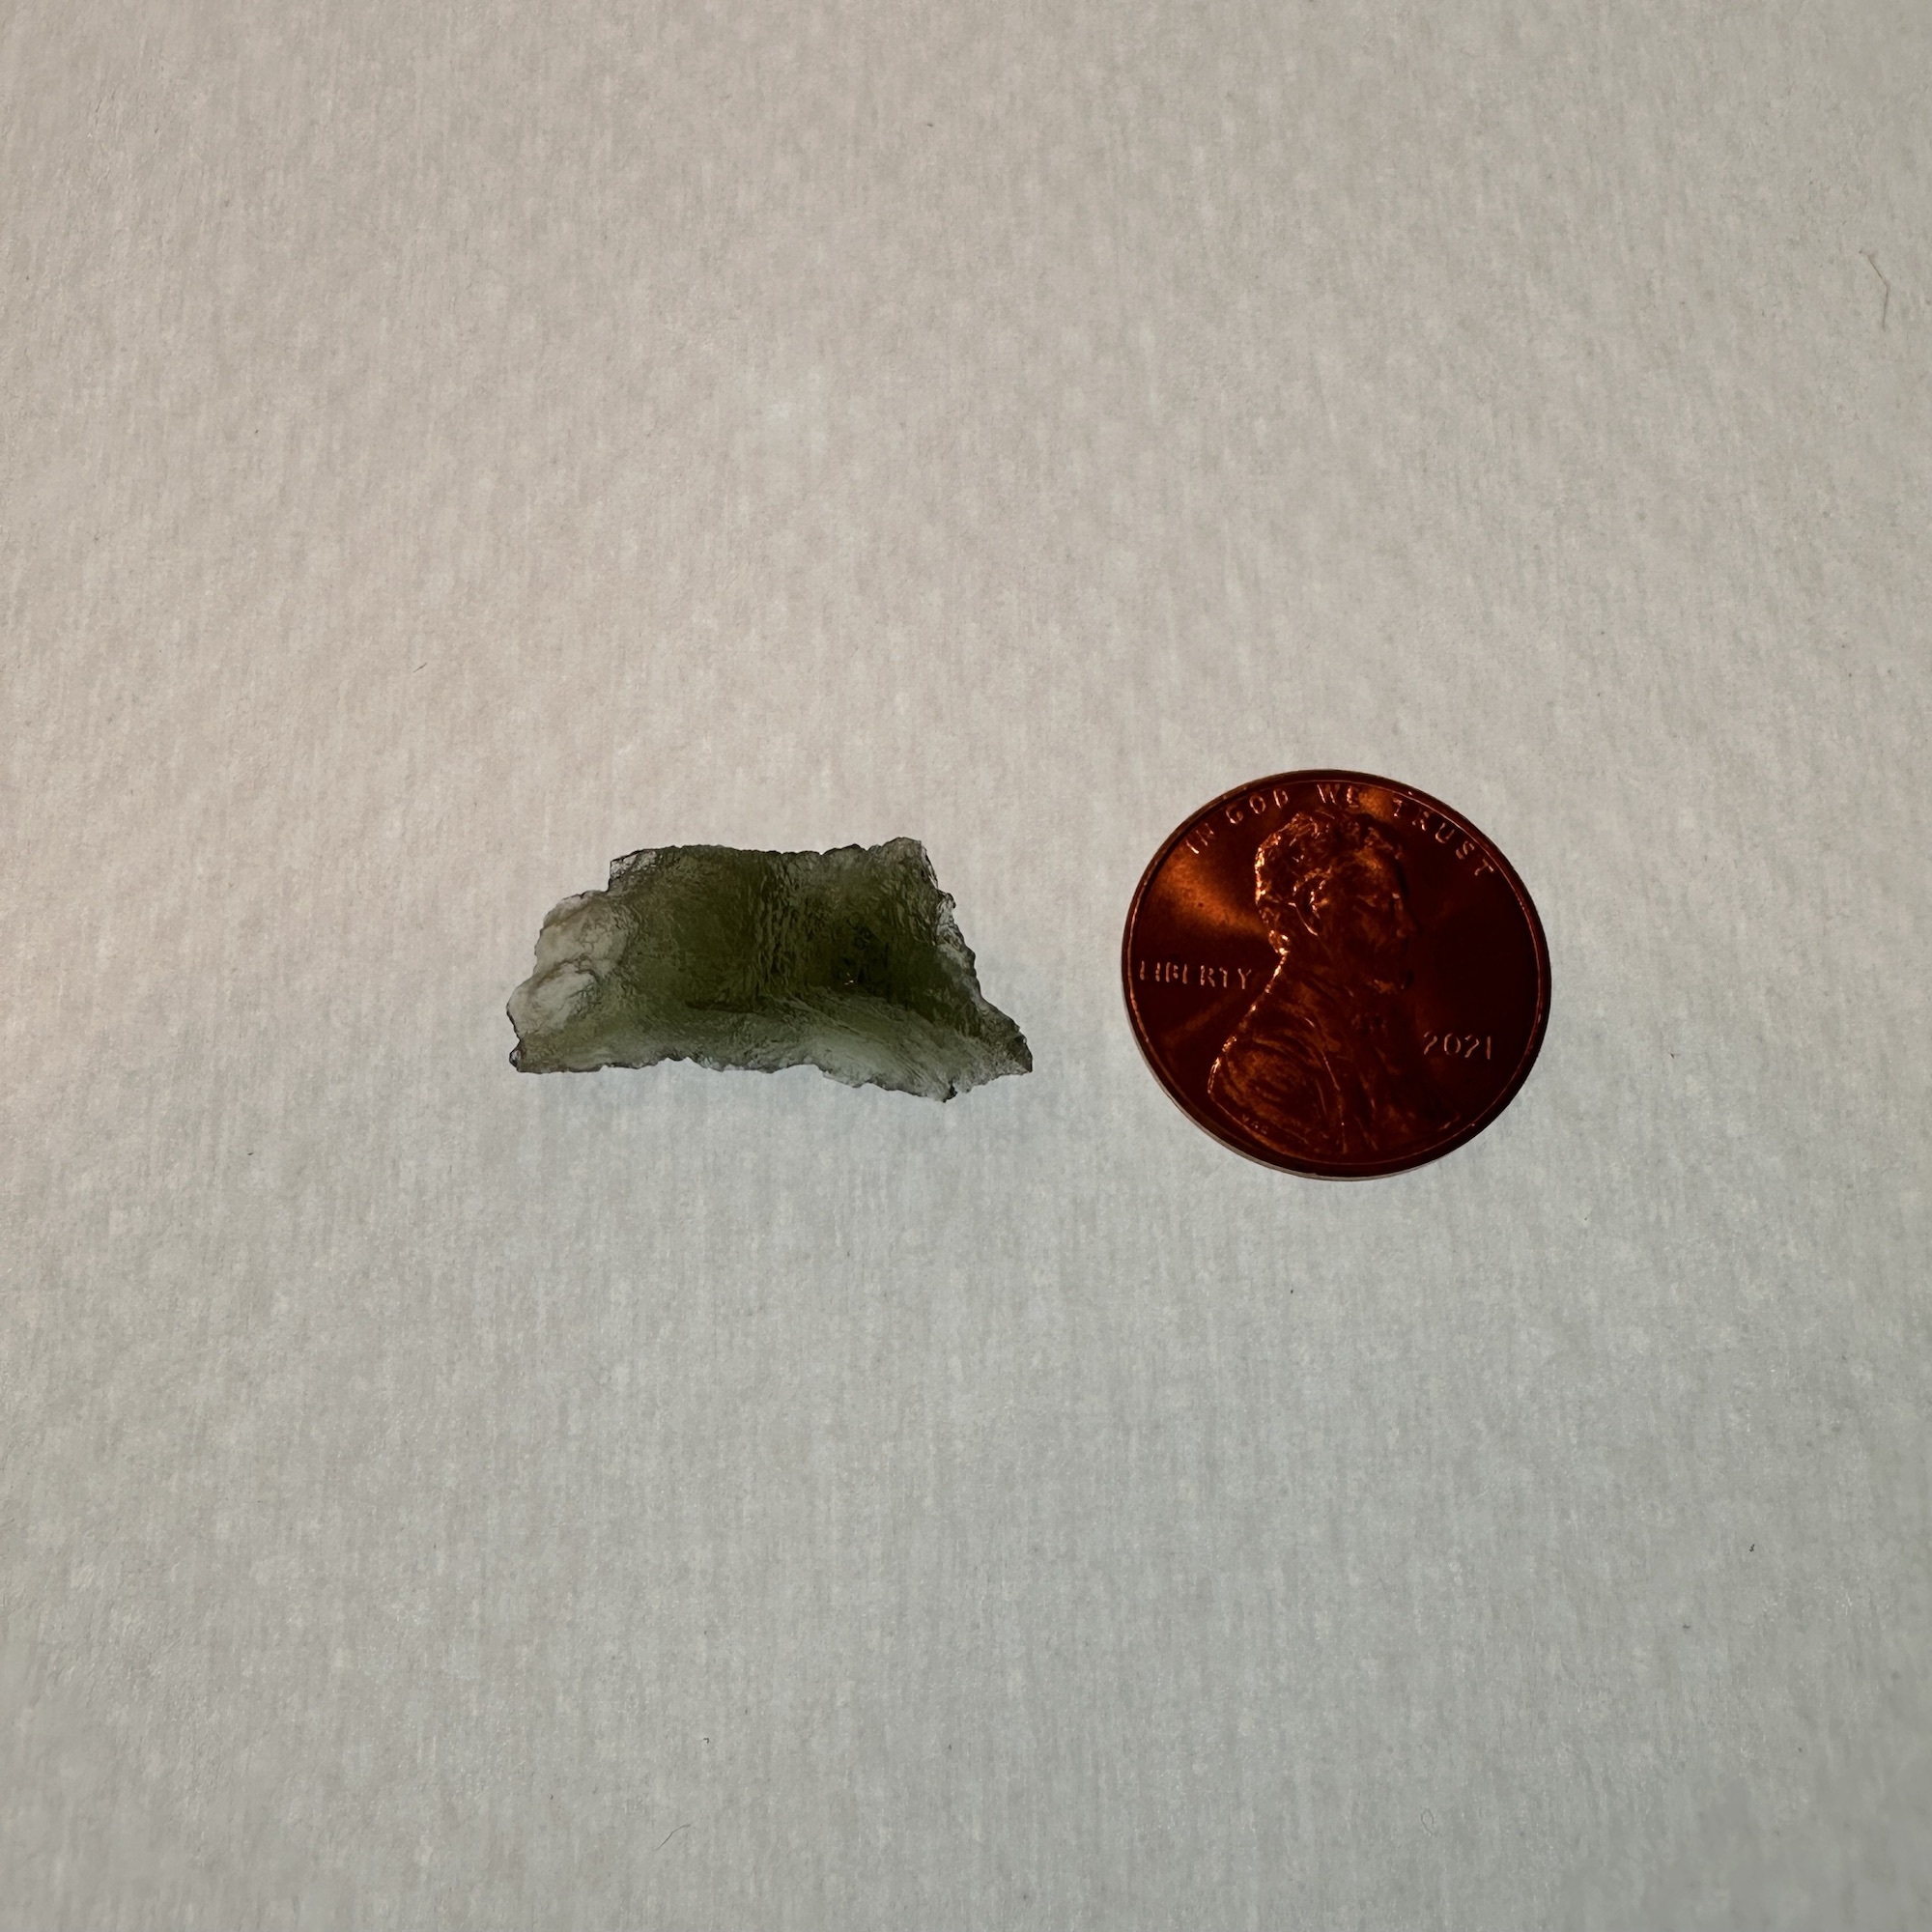 This beautiful light green translucent meteorite glass Moldavite was found in the Czech Republic